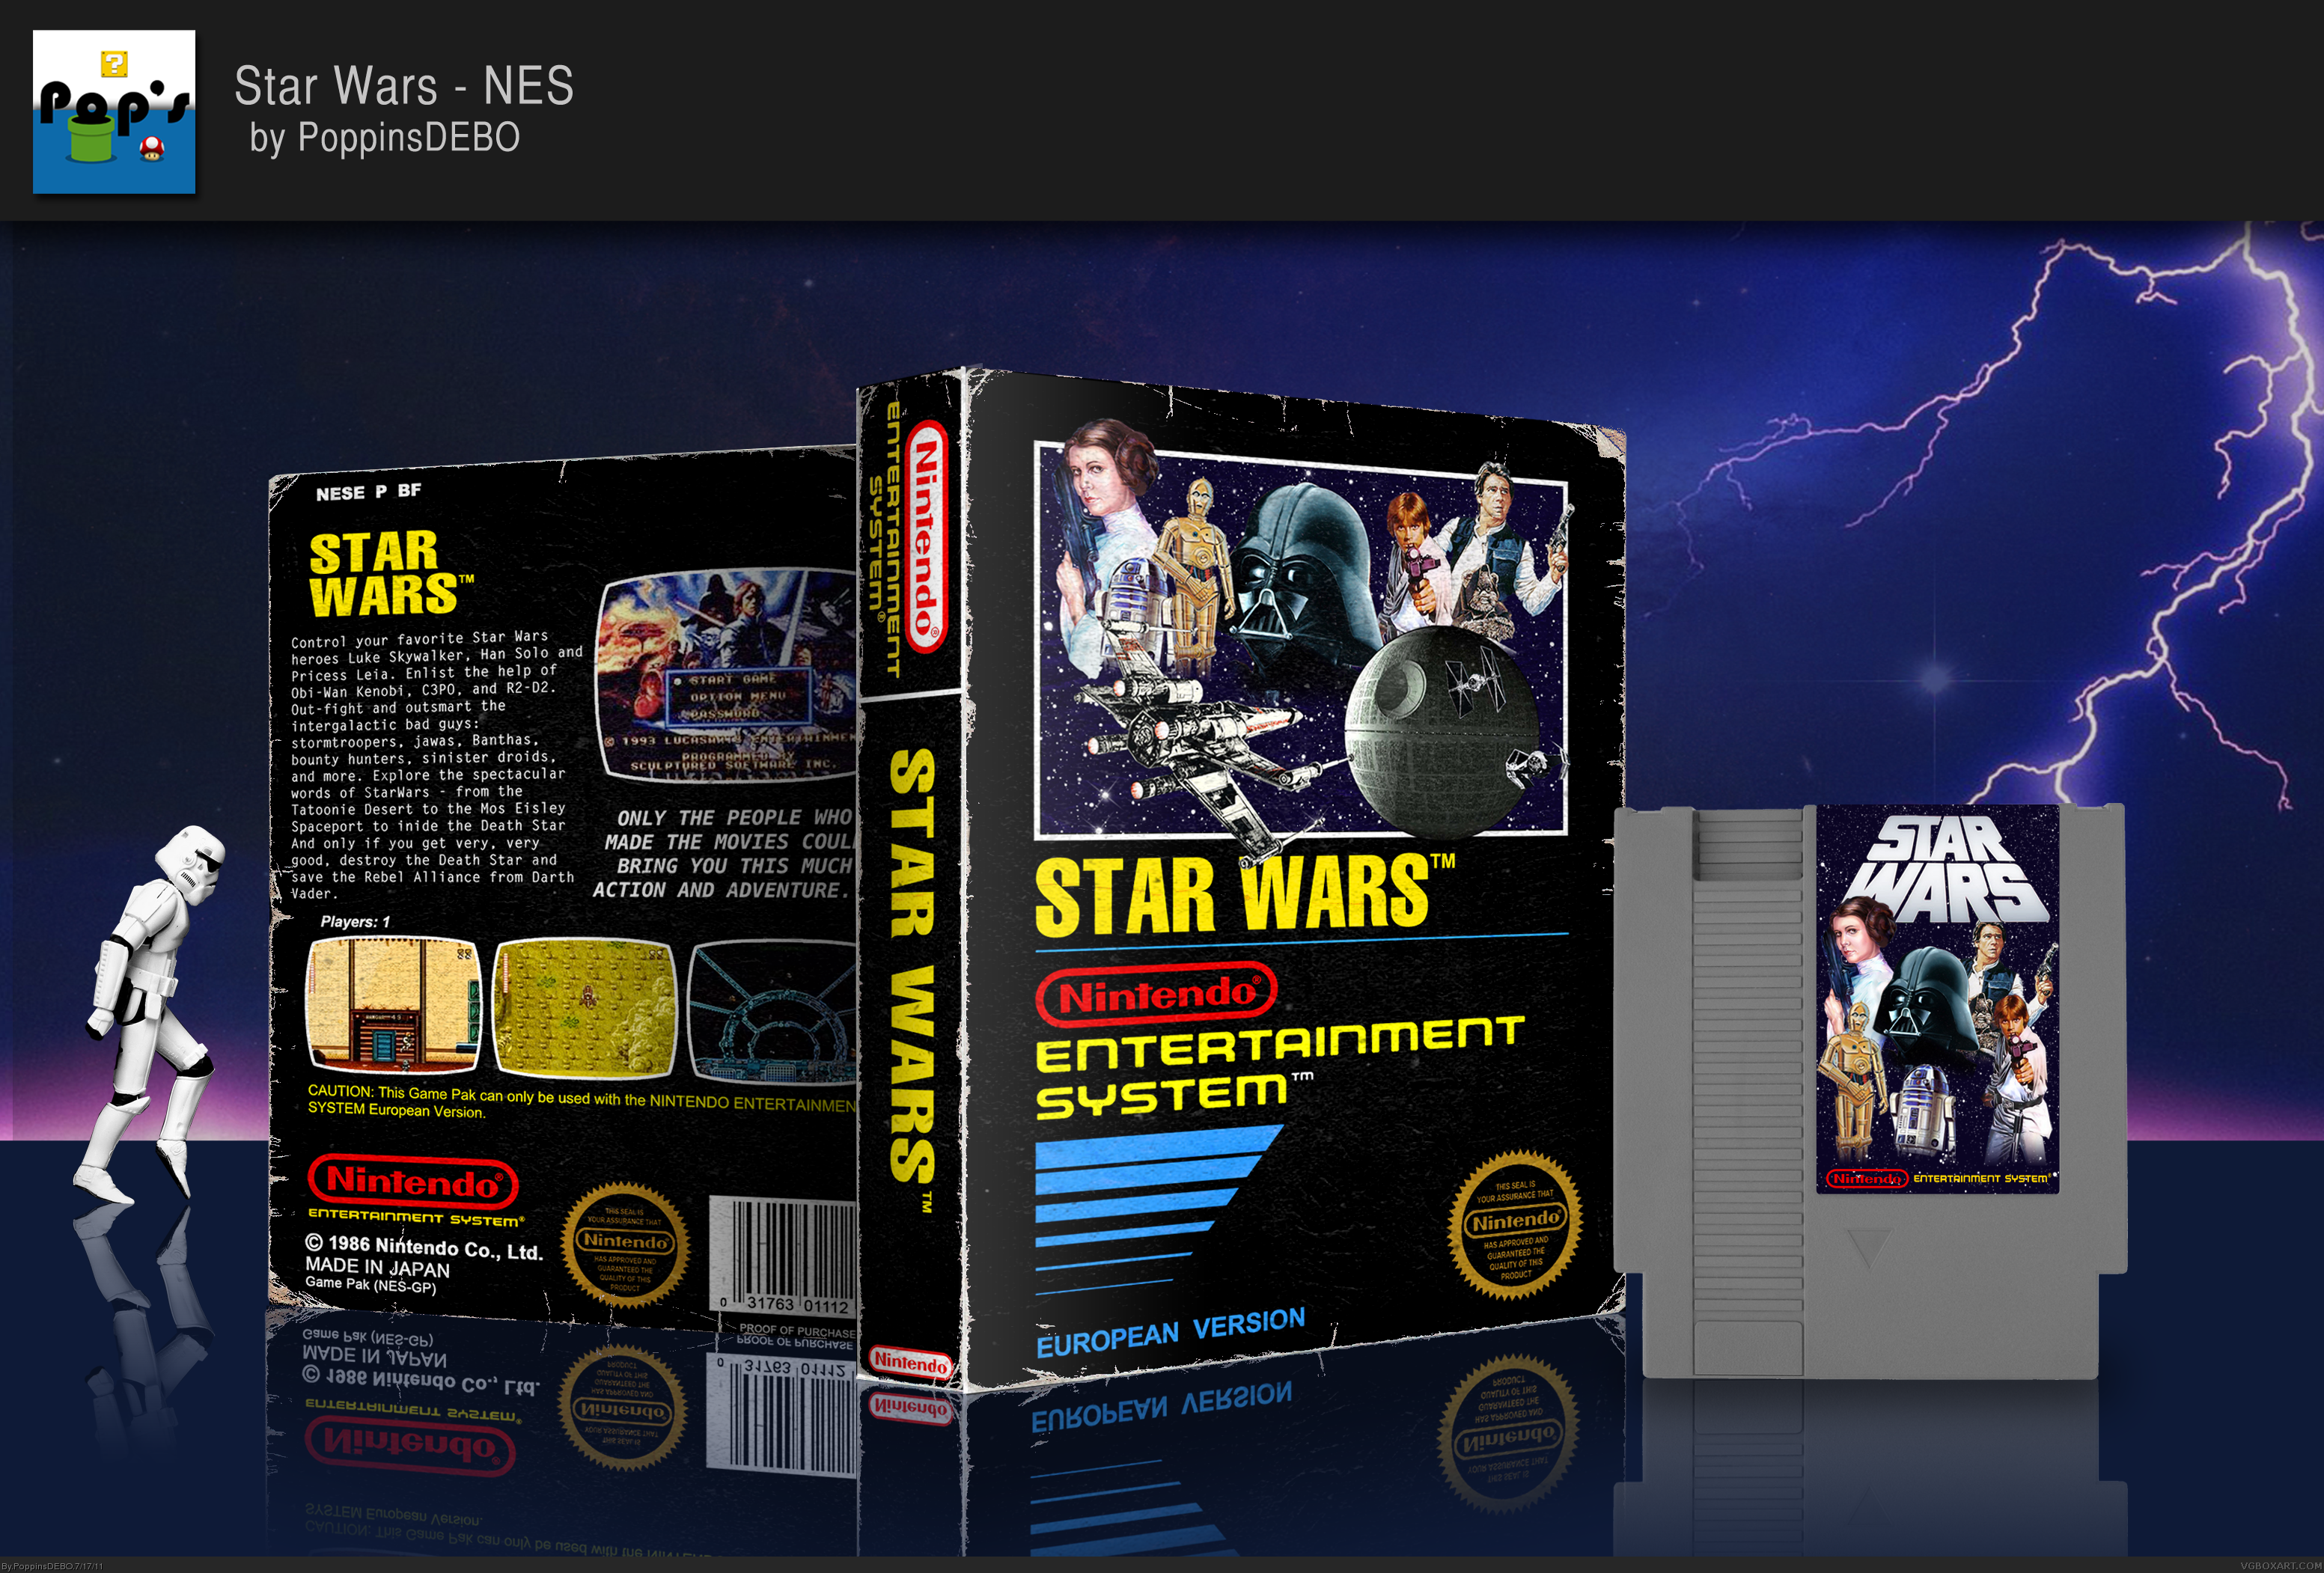 Star Wars box cover